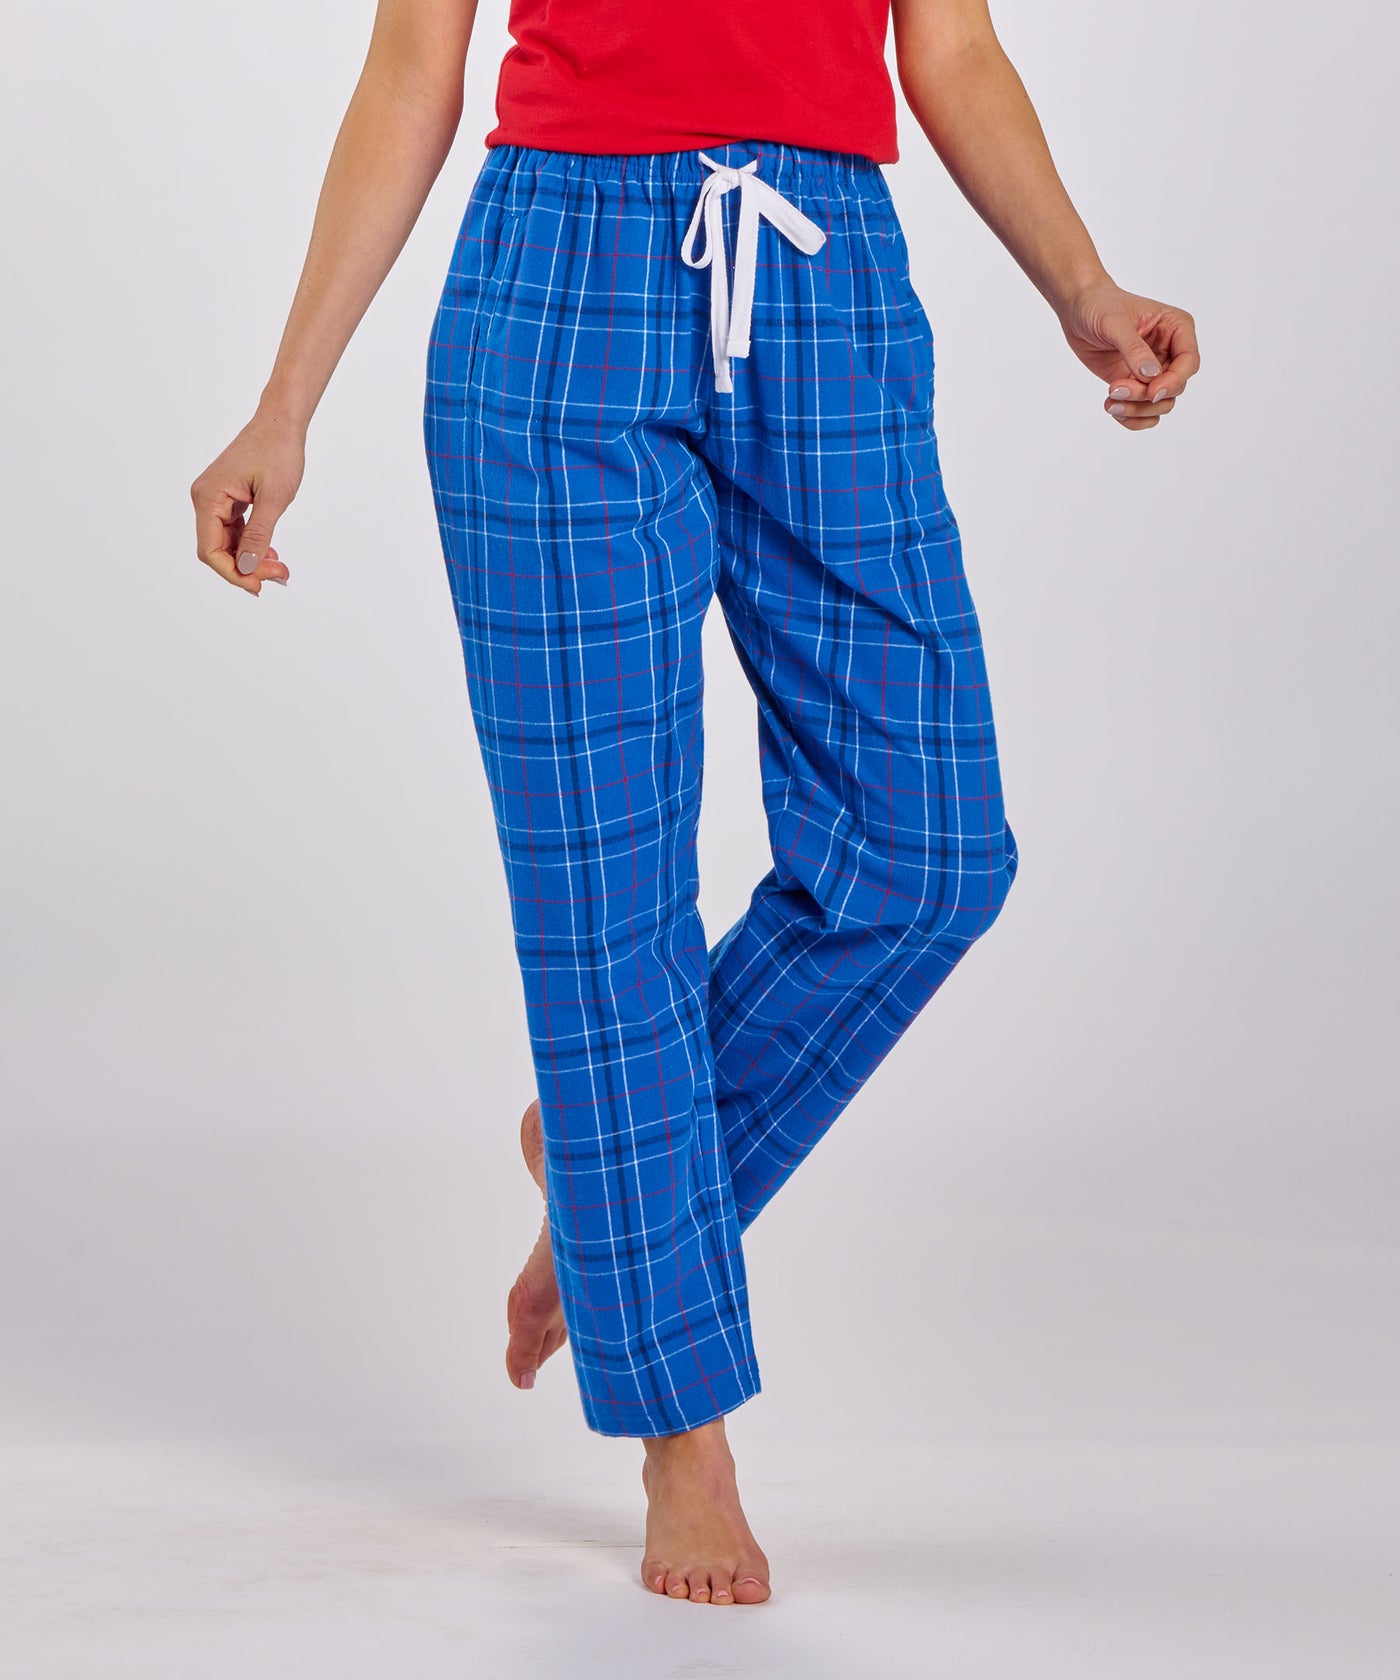 Female BOXERS Flannel - Blue, White & Pink Plaid – BaggyPants Muskoka